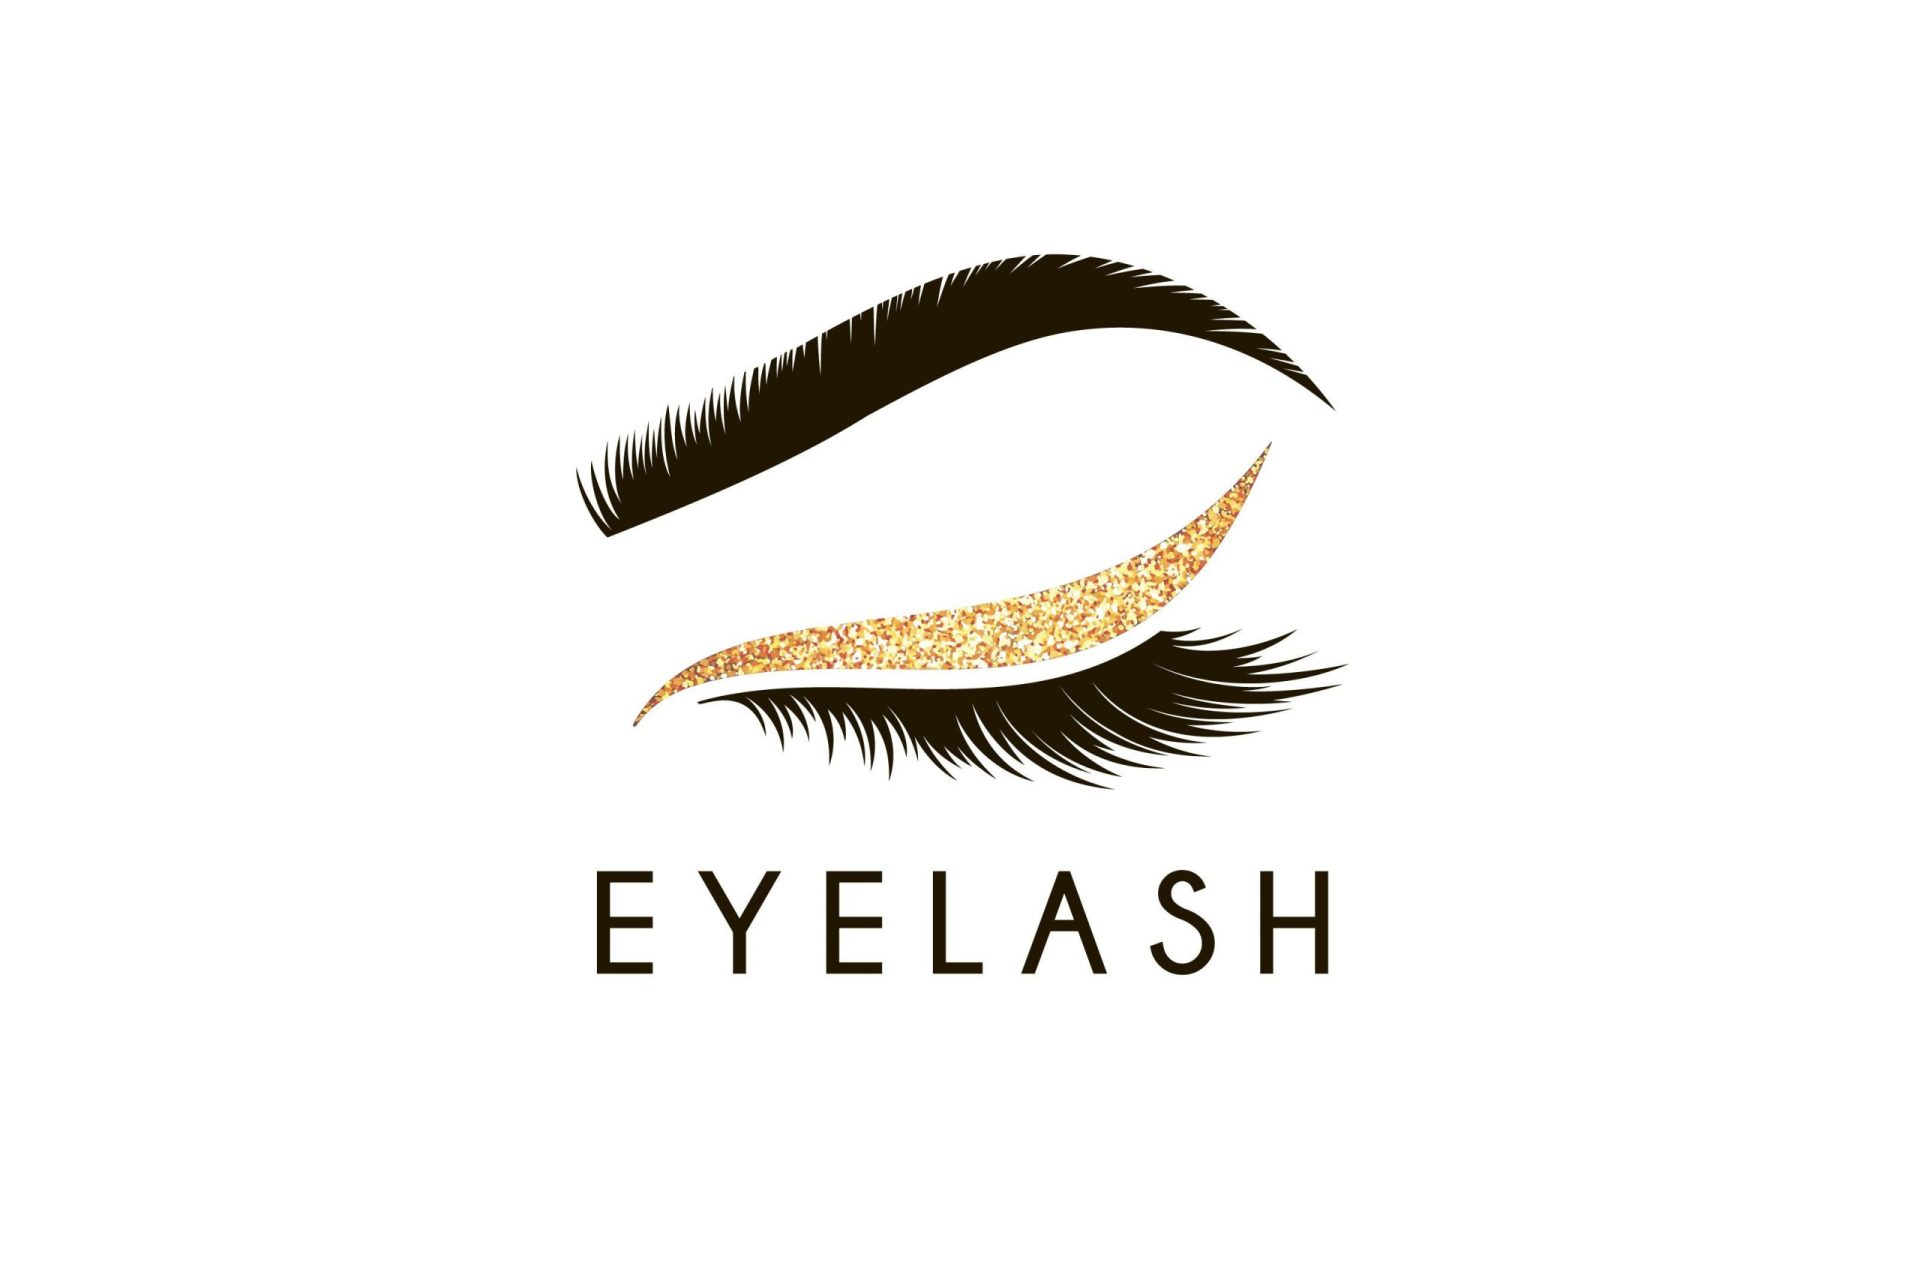 eyelash logo ideas 2